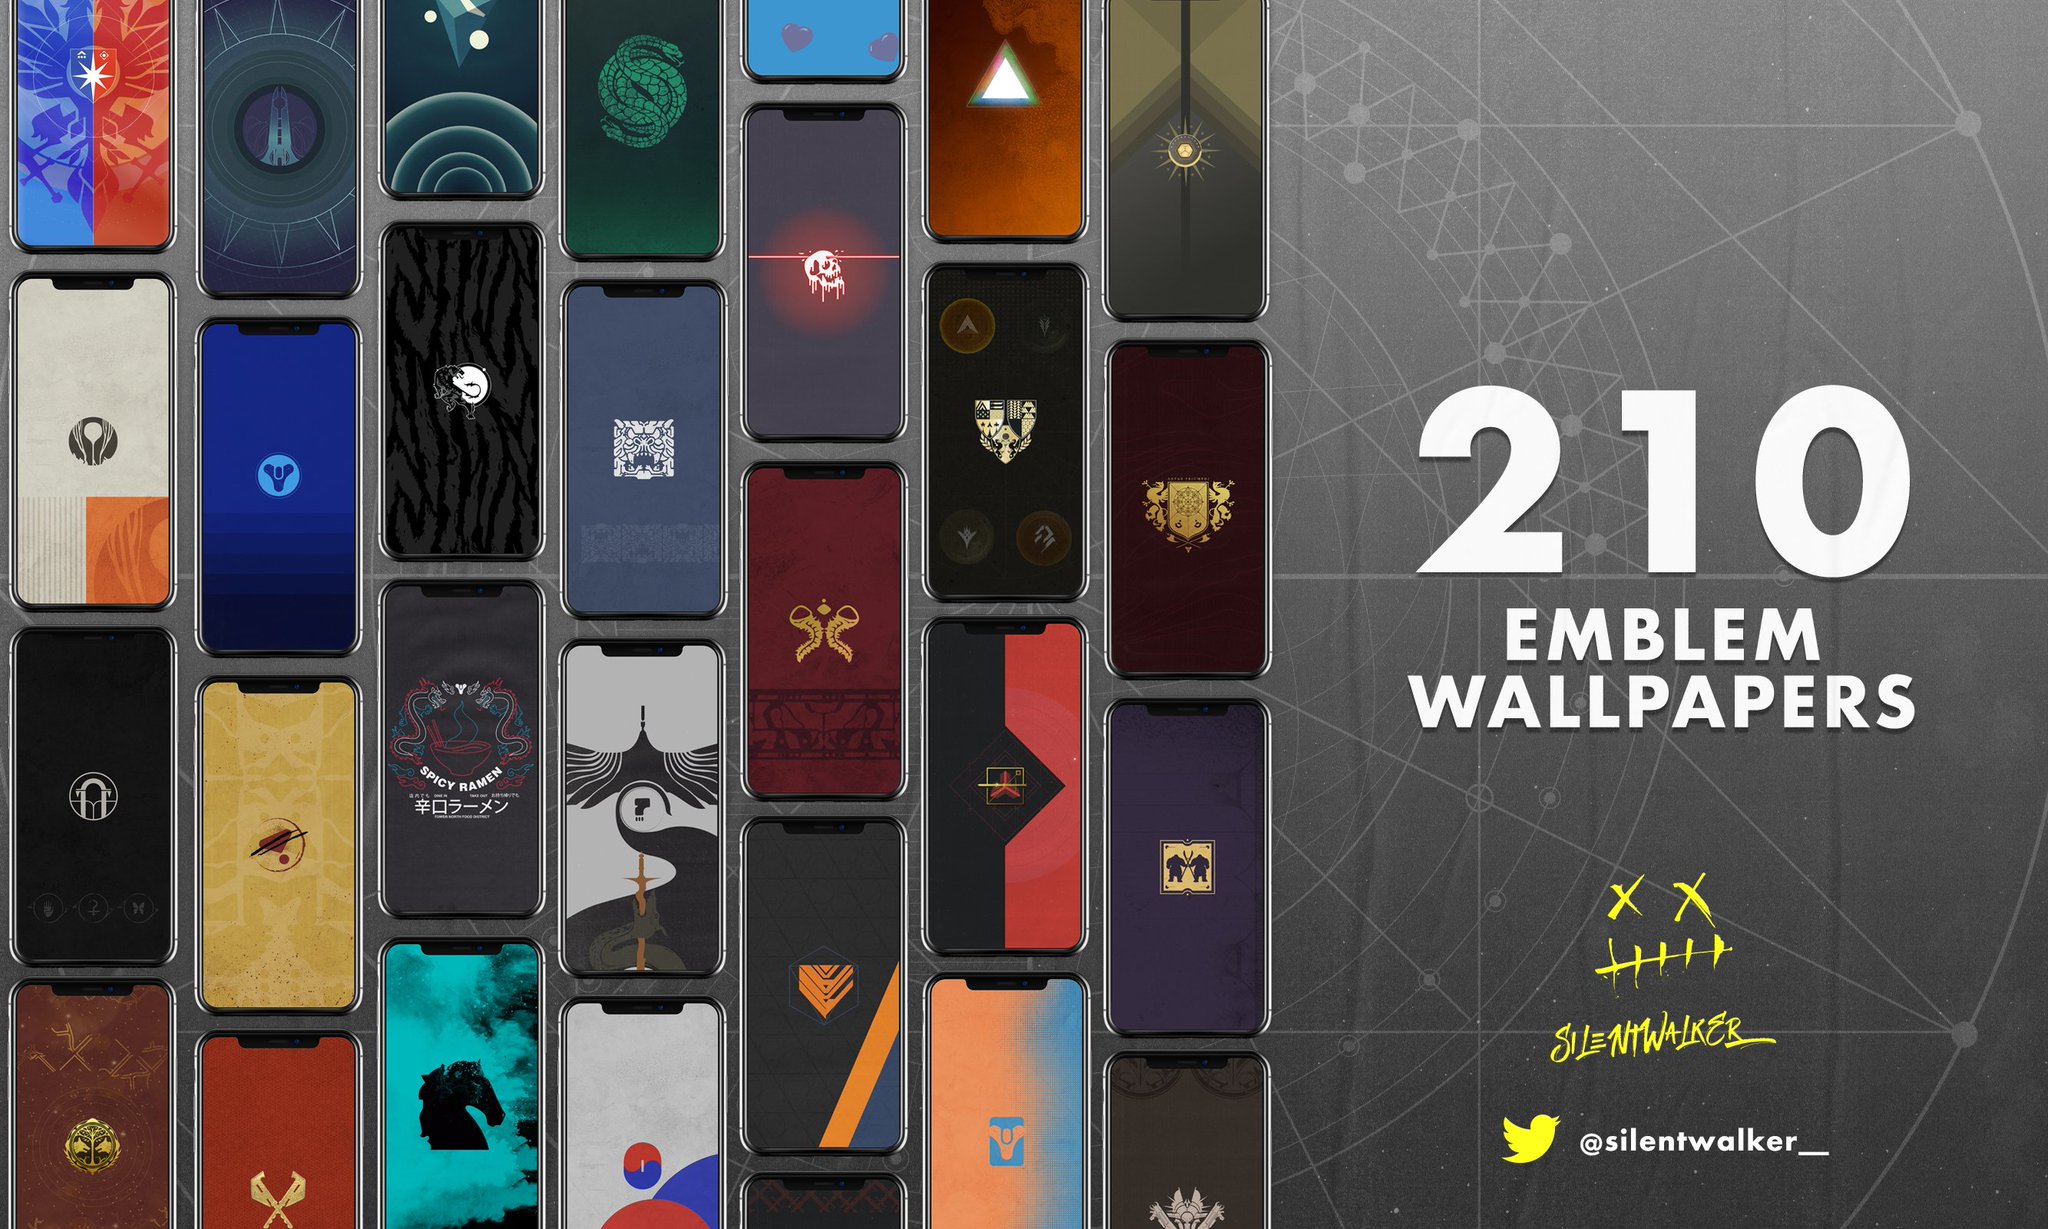 Destiny 2 iPhone Wallpaper mockup silentwalker_